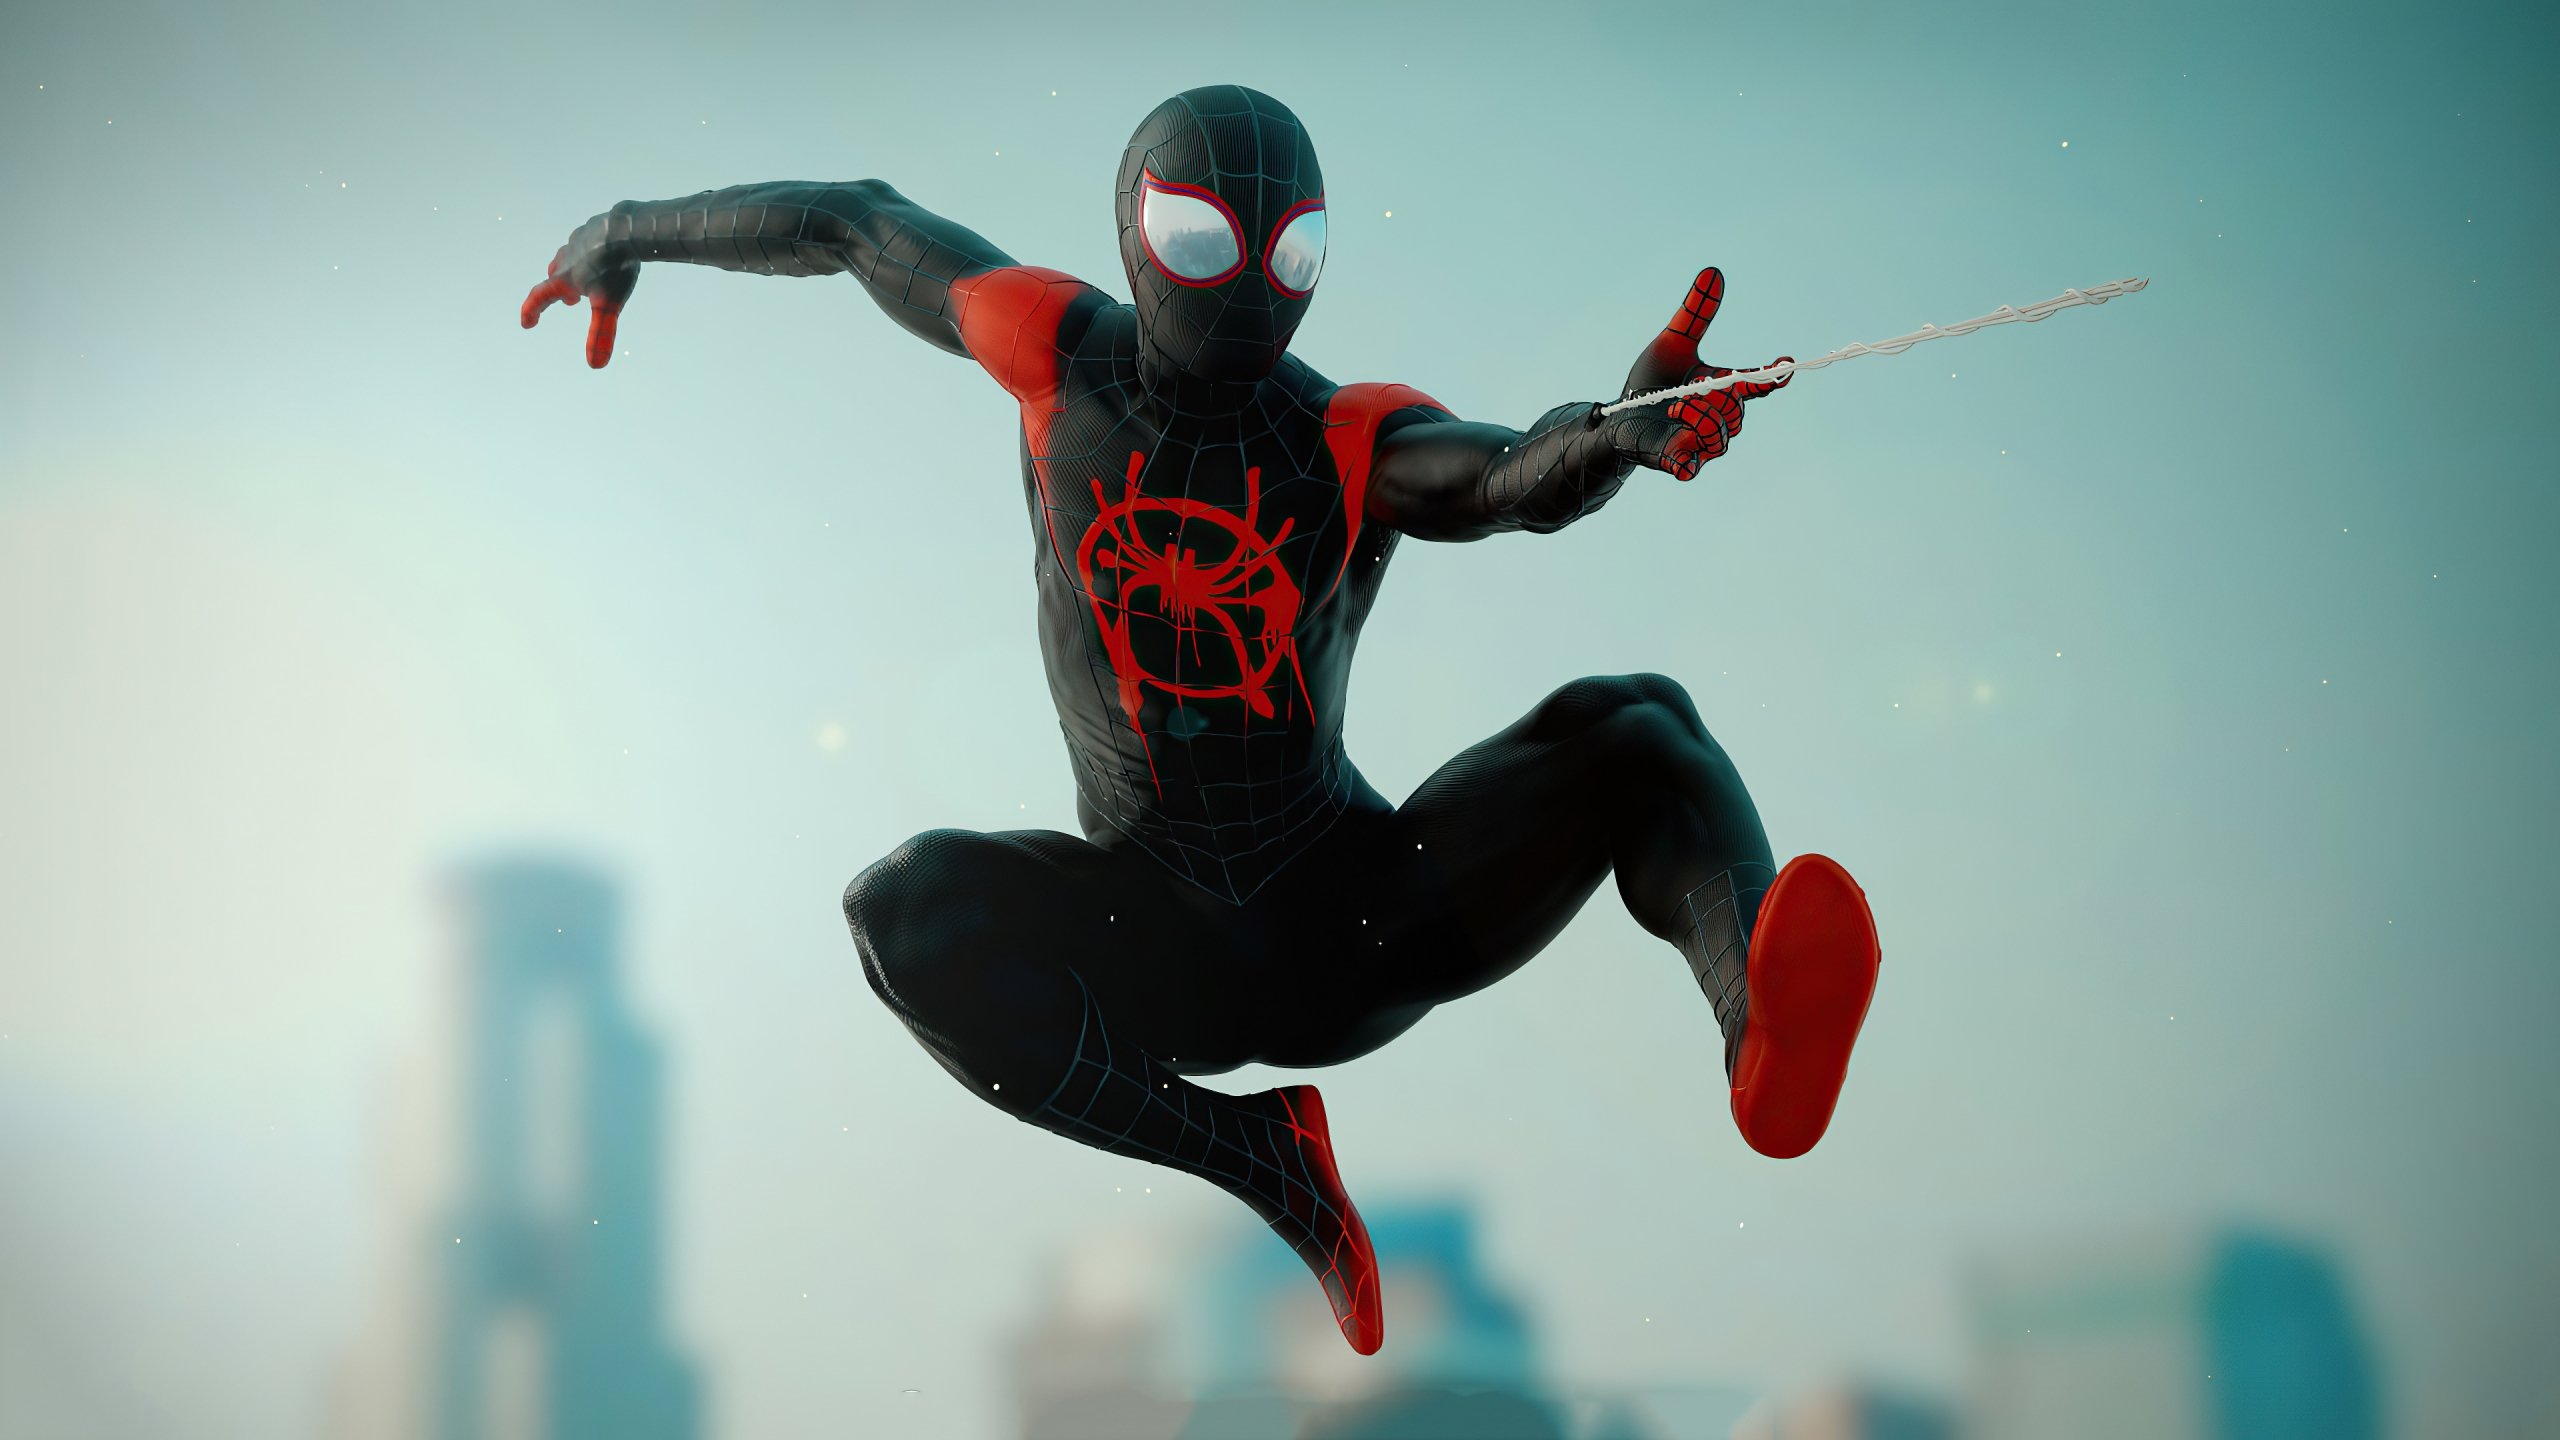 Miles Morales as Spiderman 2020 Wallpaper 4k Ultra HD ID:6065